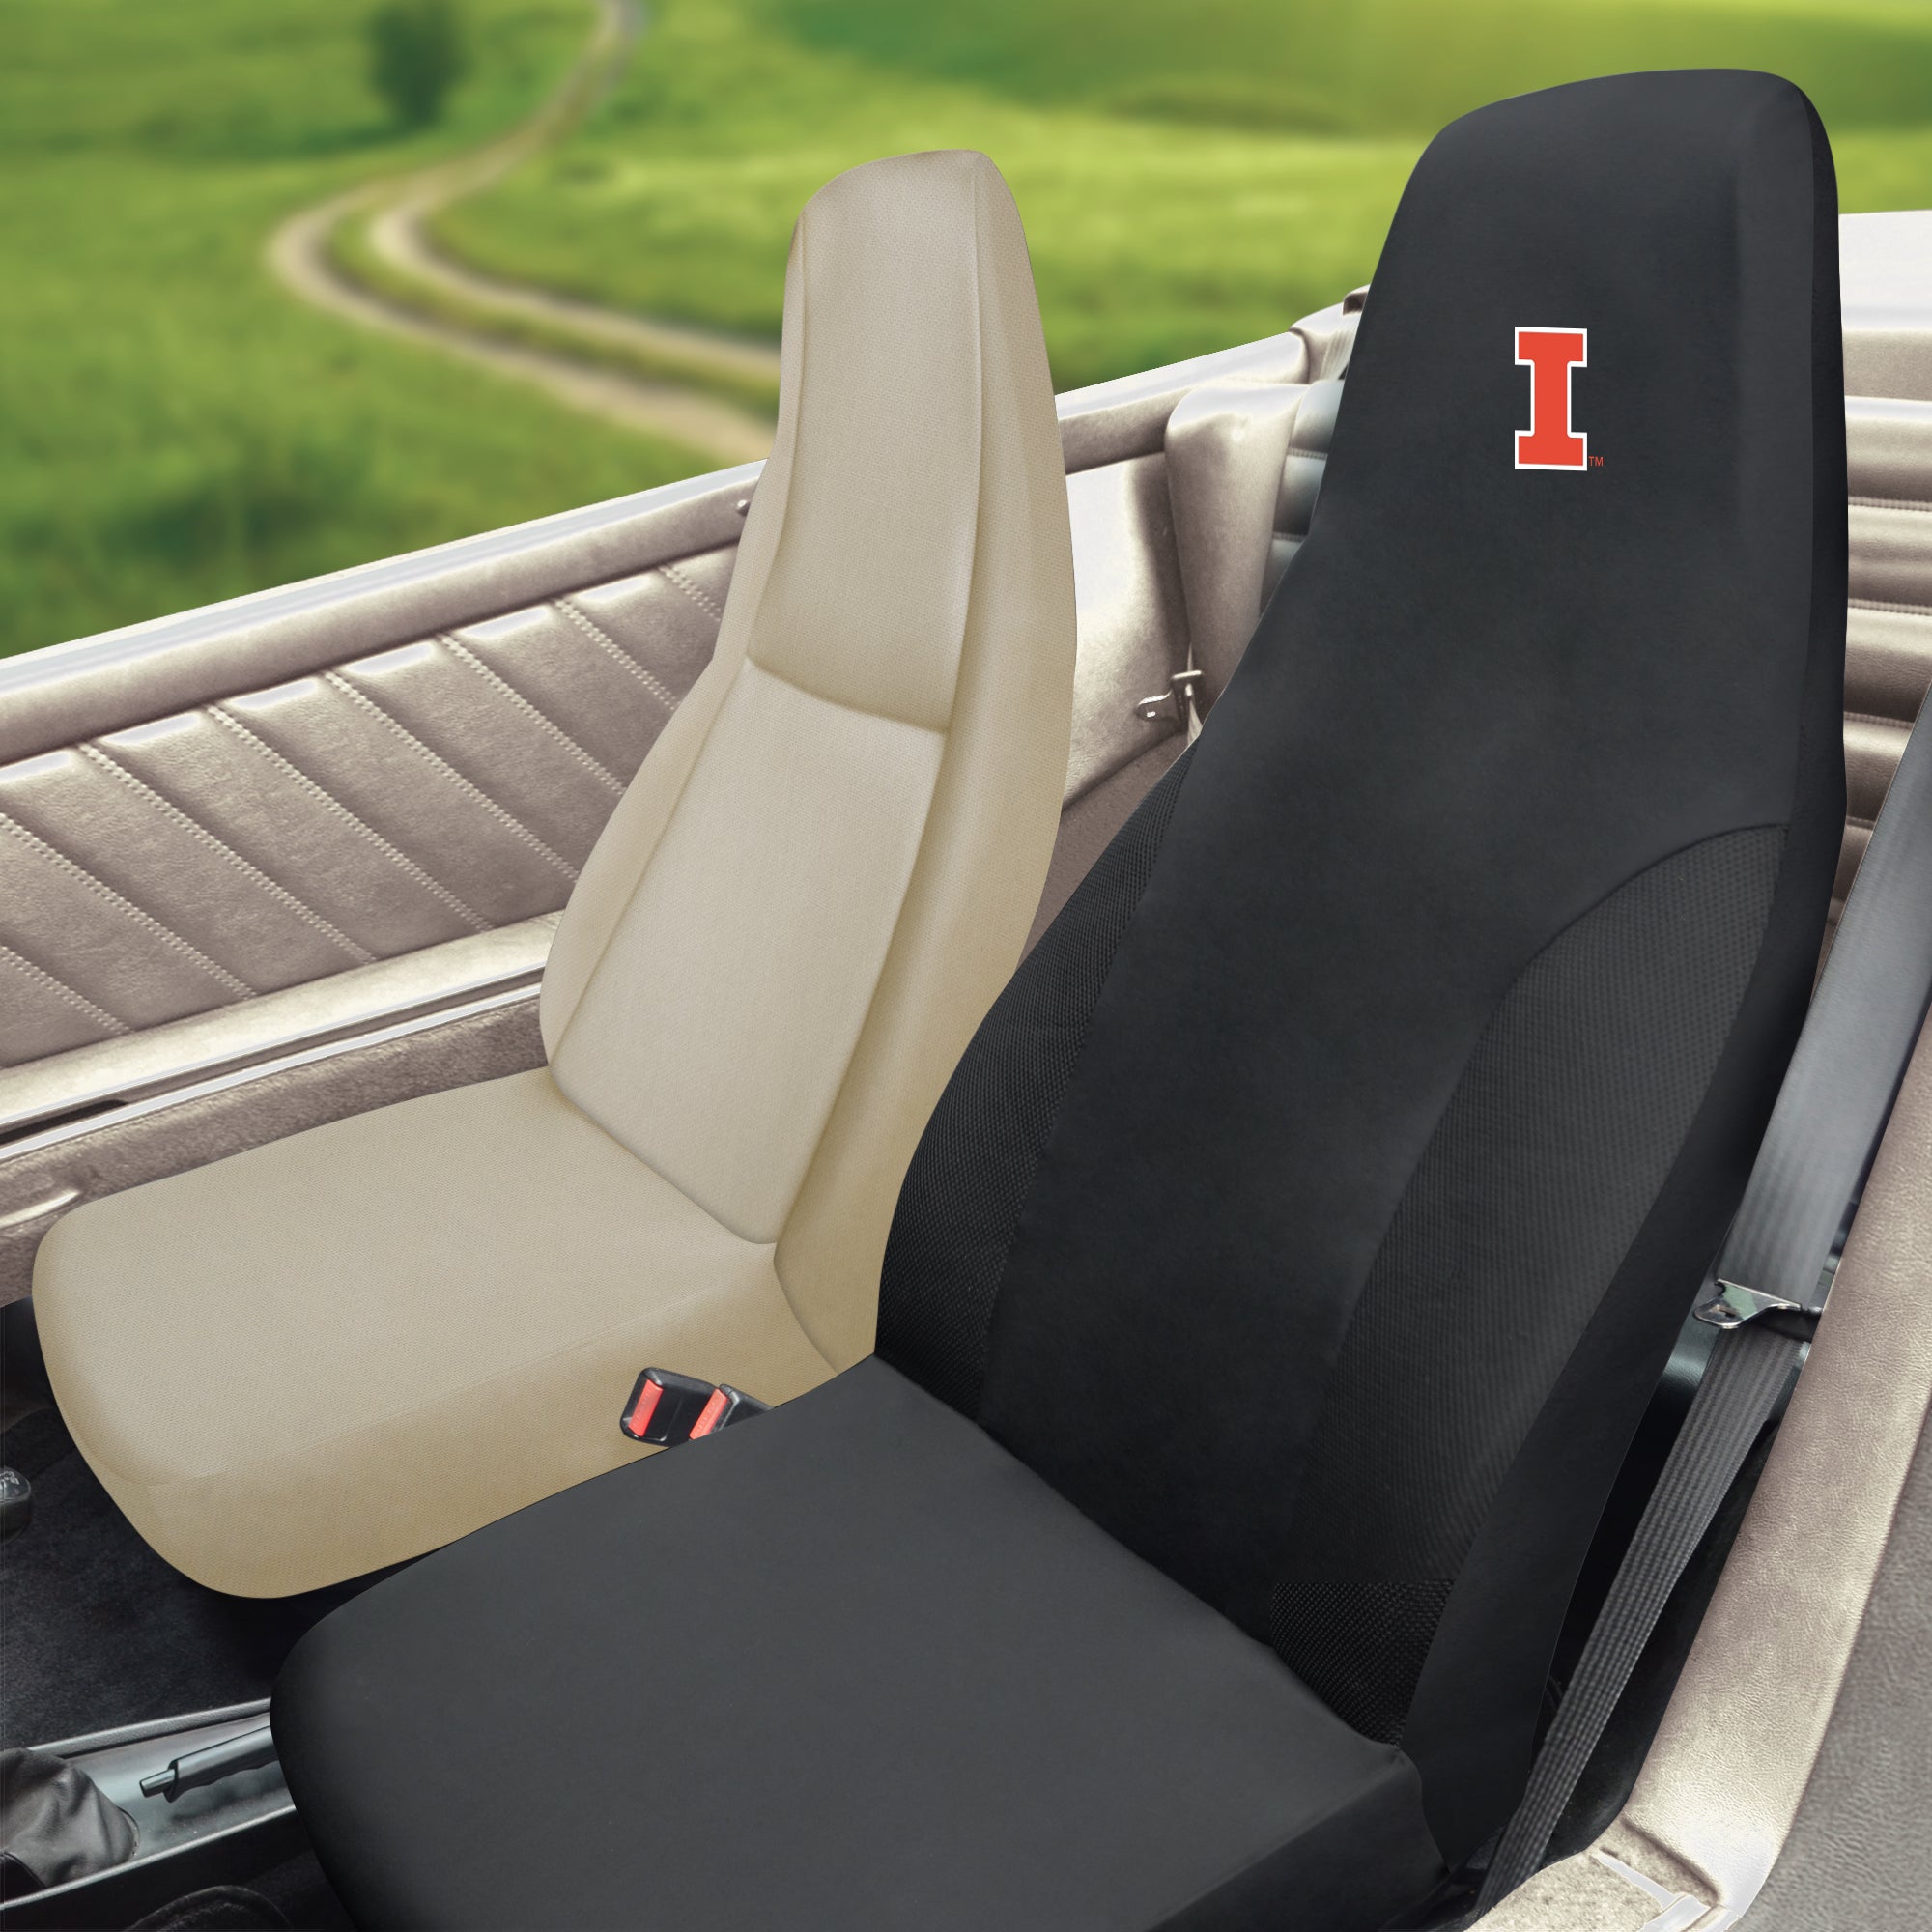 University of Illinois Set of 2 Car Seat Covers